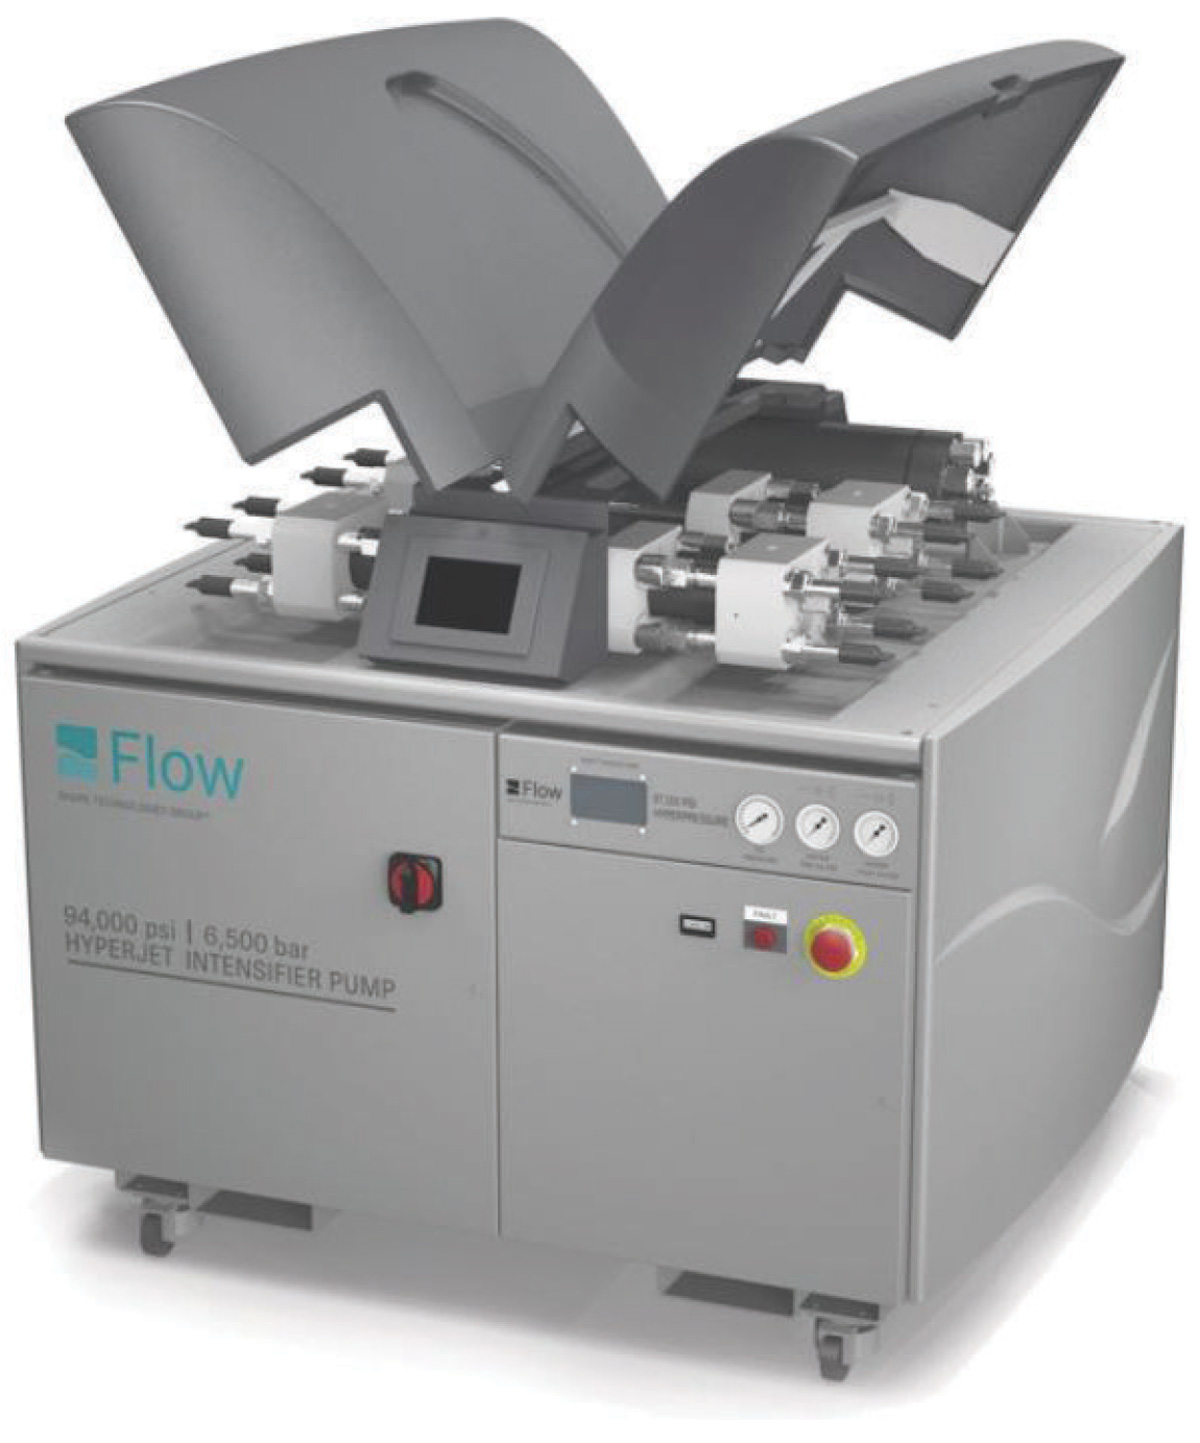 Image of Flow’s HyperJet pump with 94,000 psi